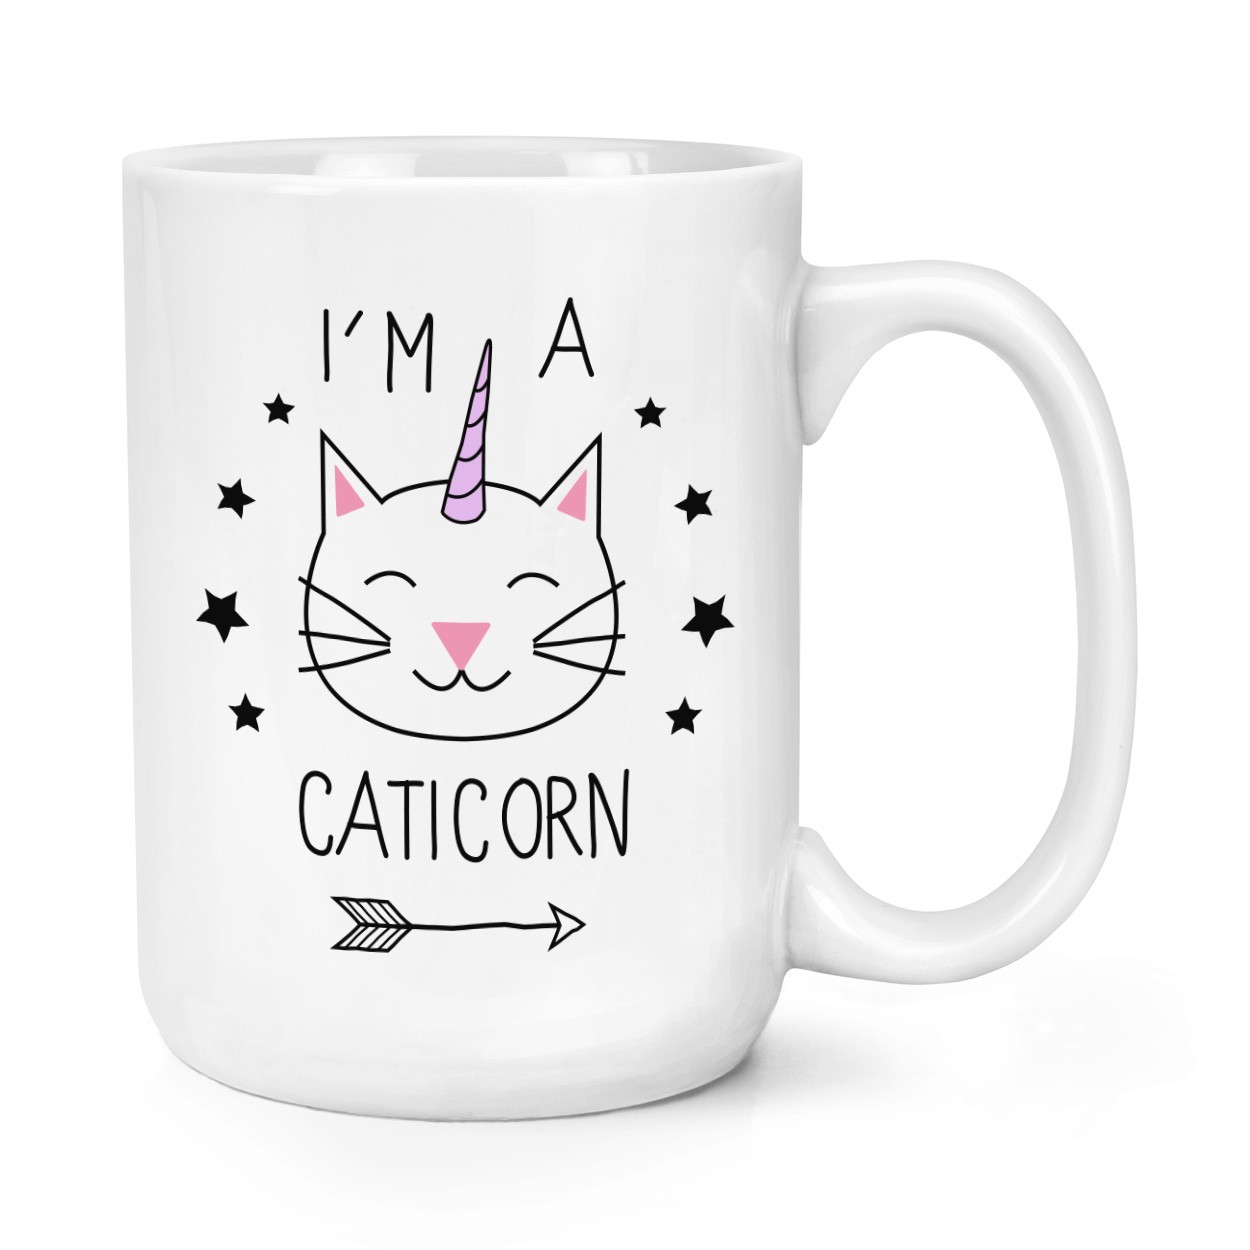 I'm A Caticorn 15oz Large Mug Cup